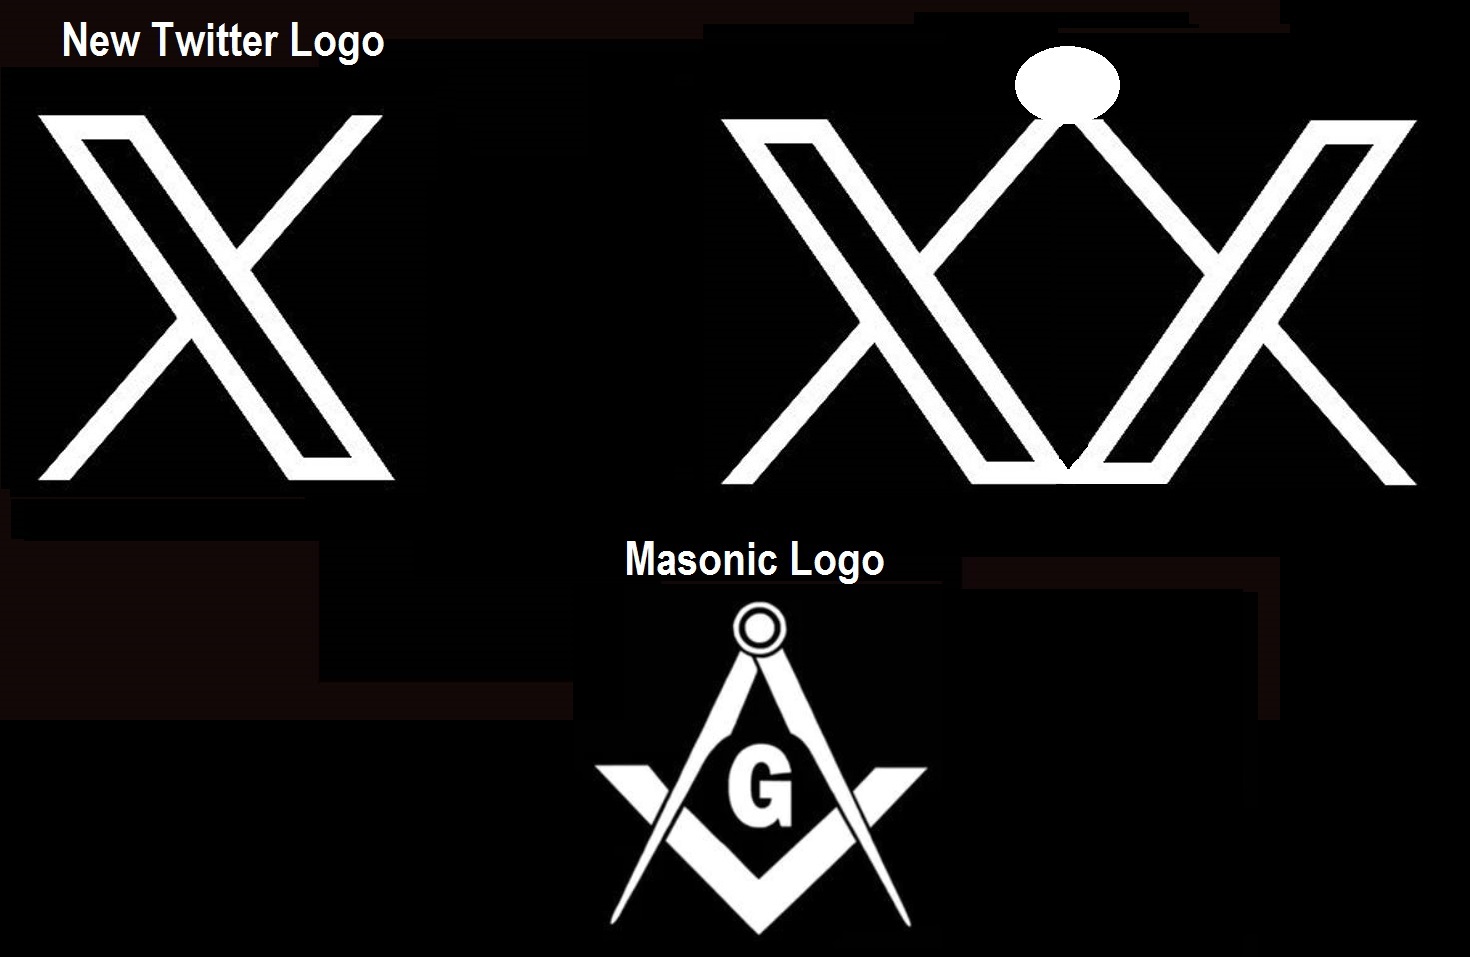 Twitter-logo-x masonic logo 3